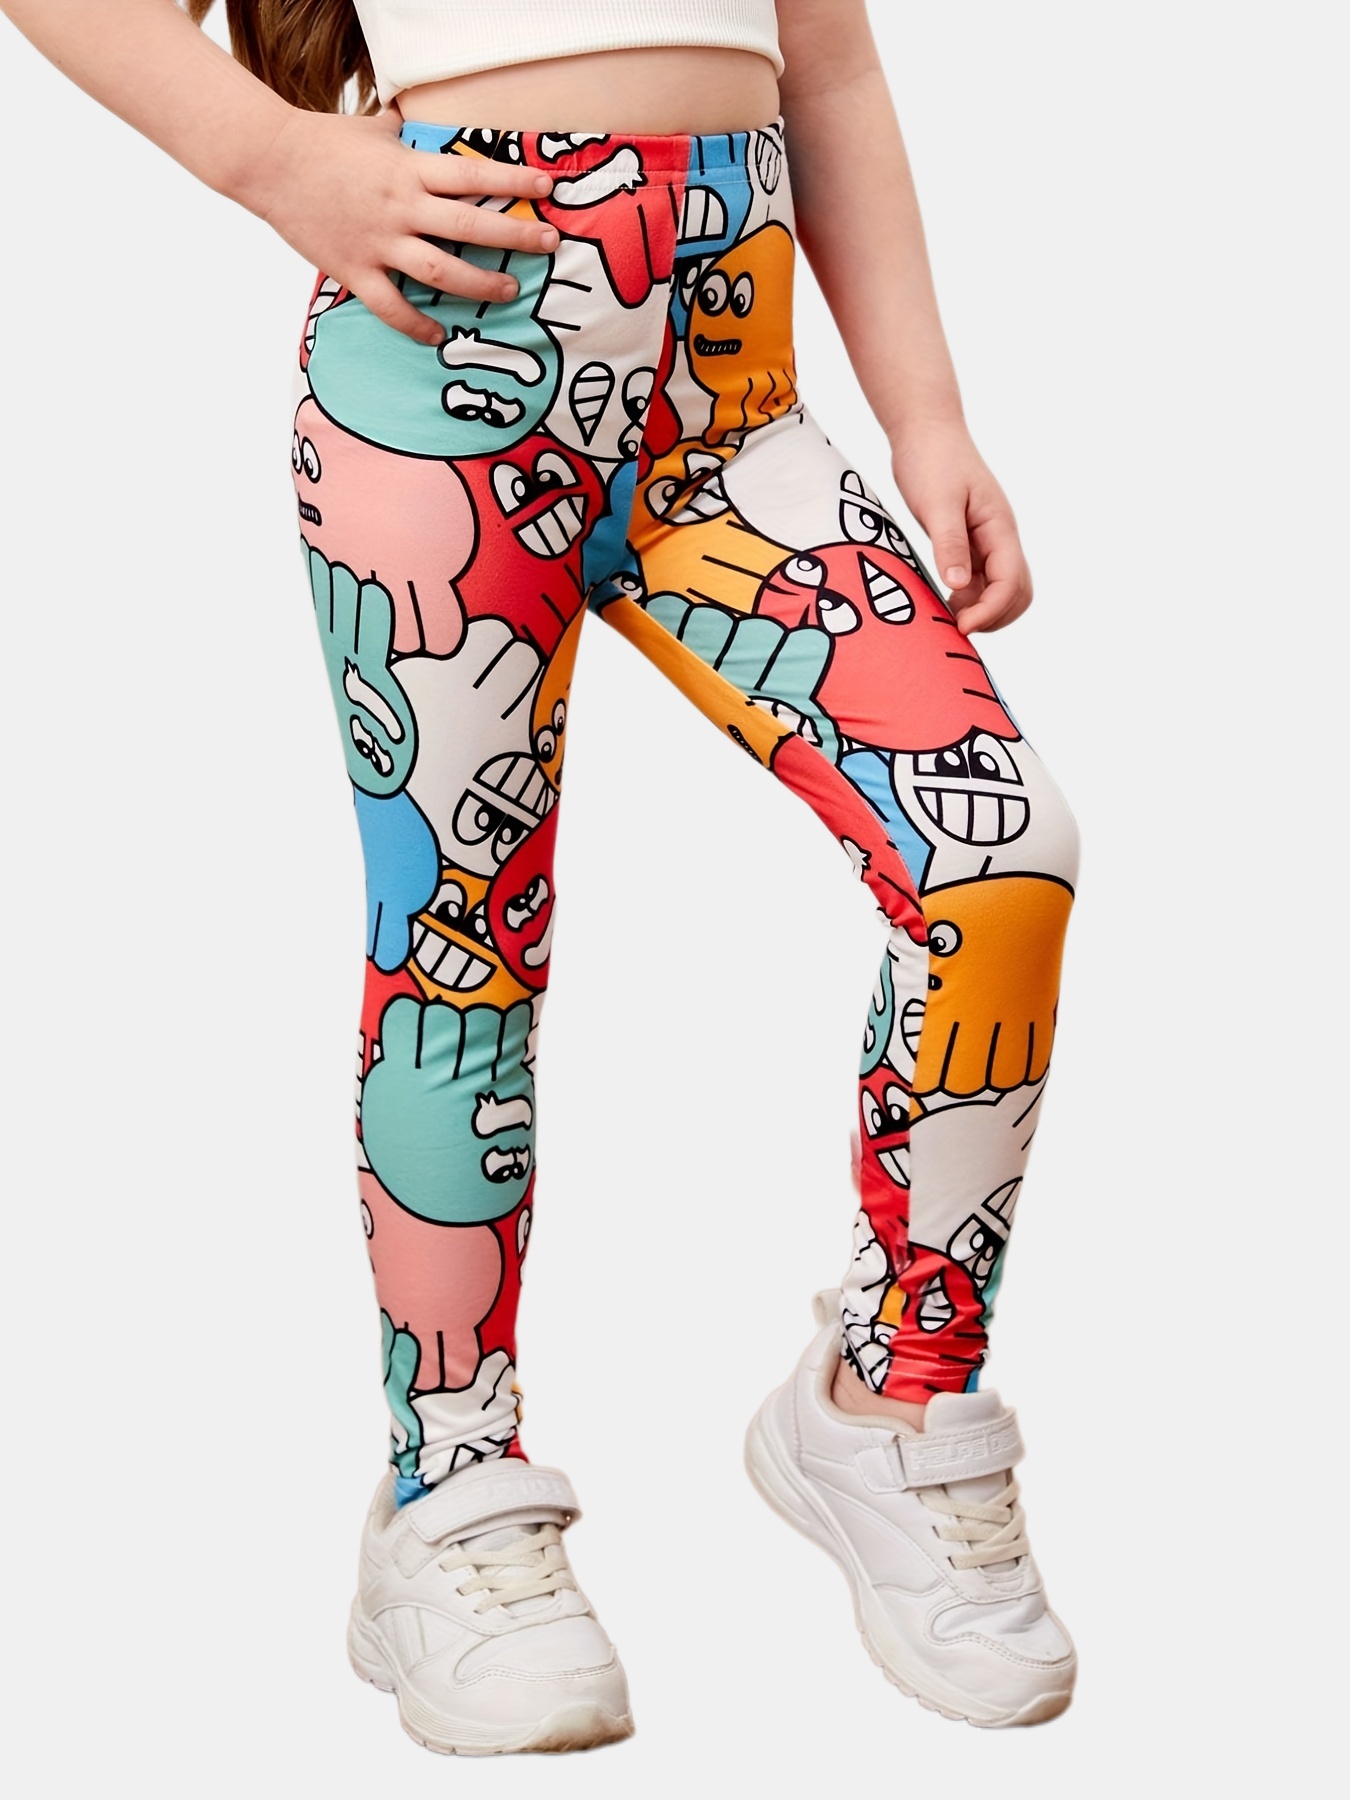 Cute Colorful Graffiti Print Girl Fashion Top and Pants Set - Chubibi